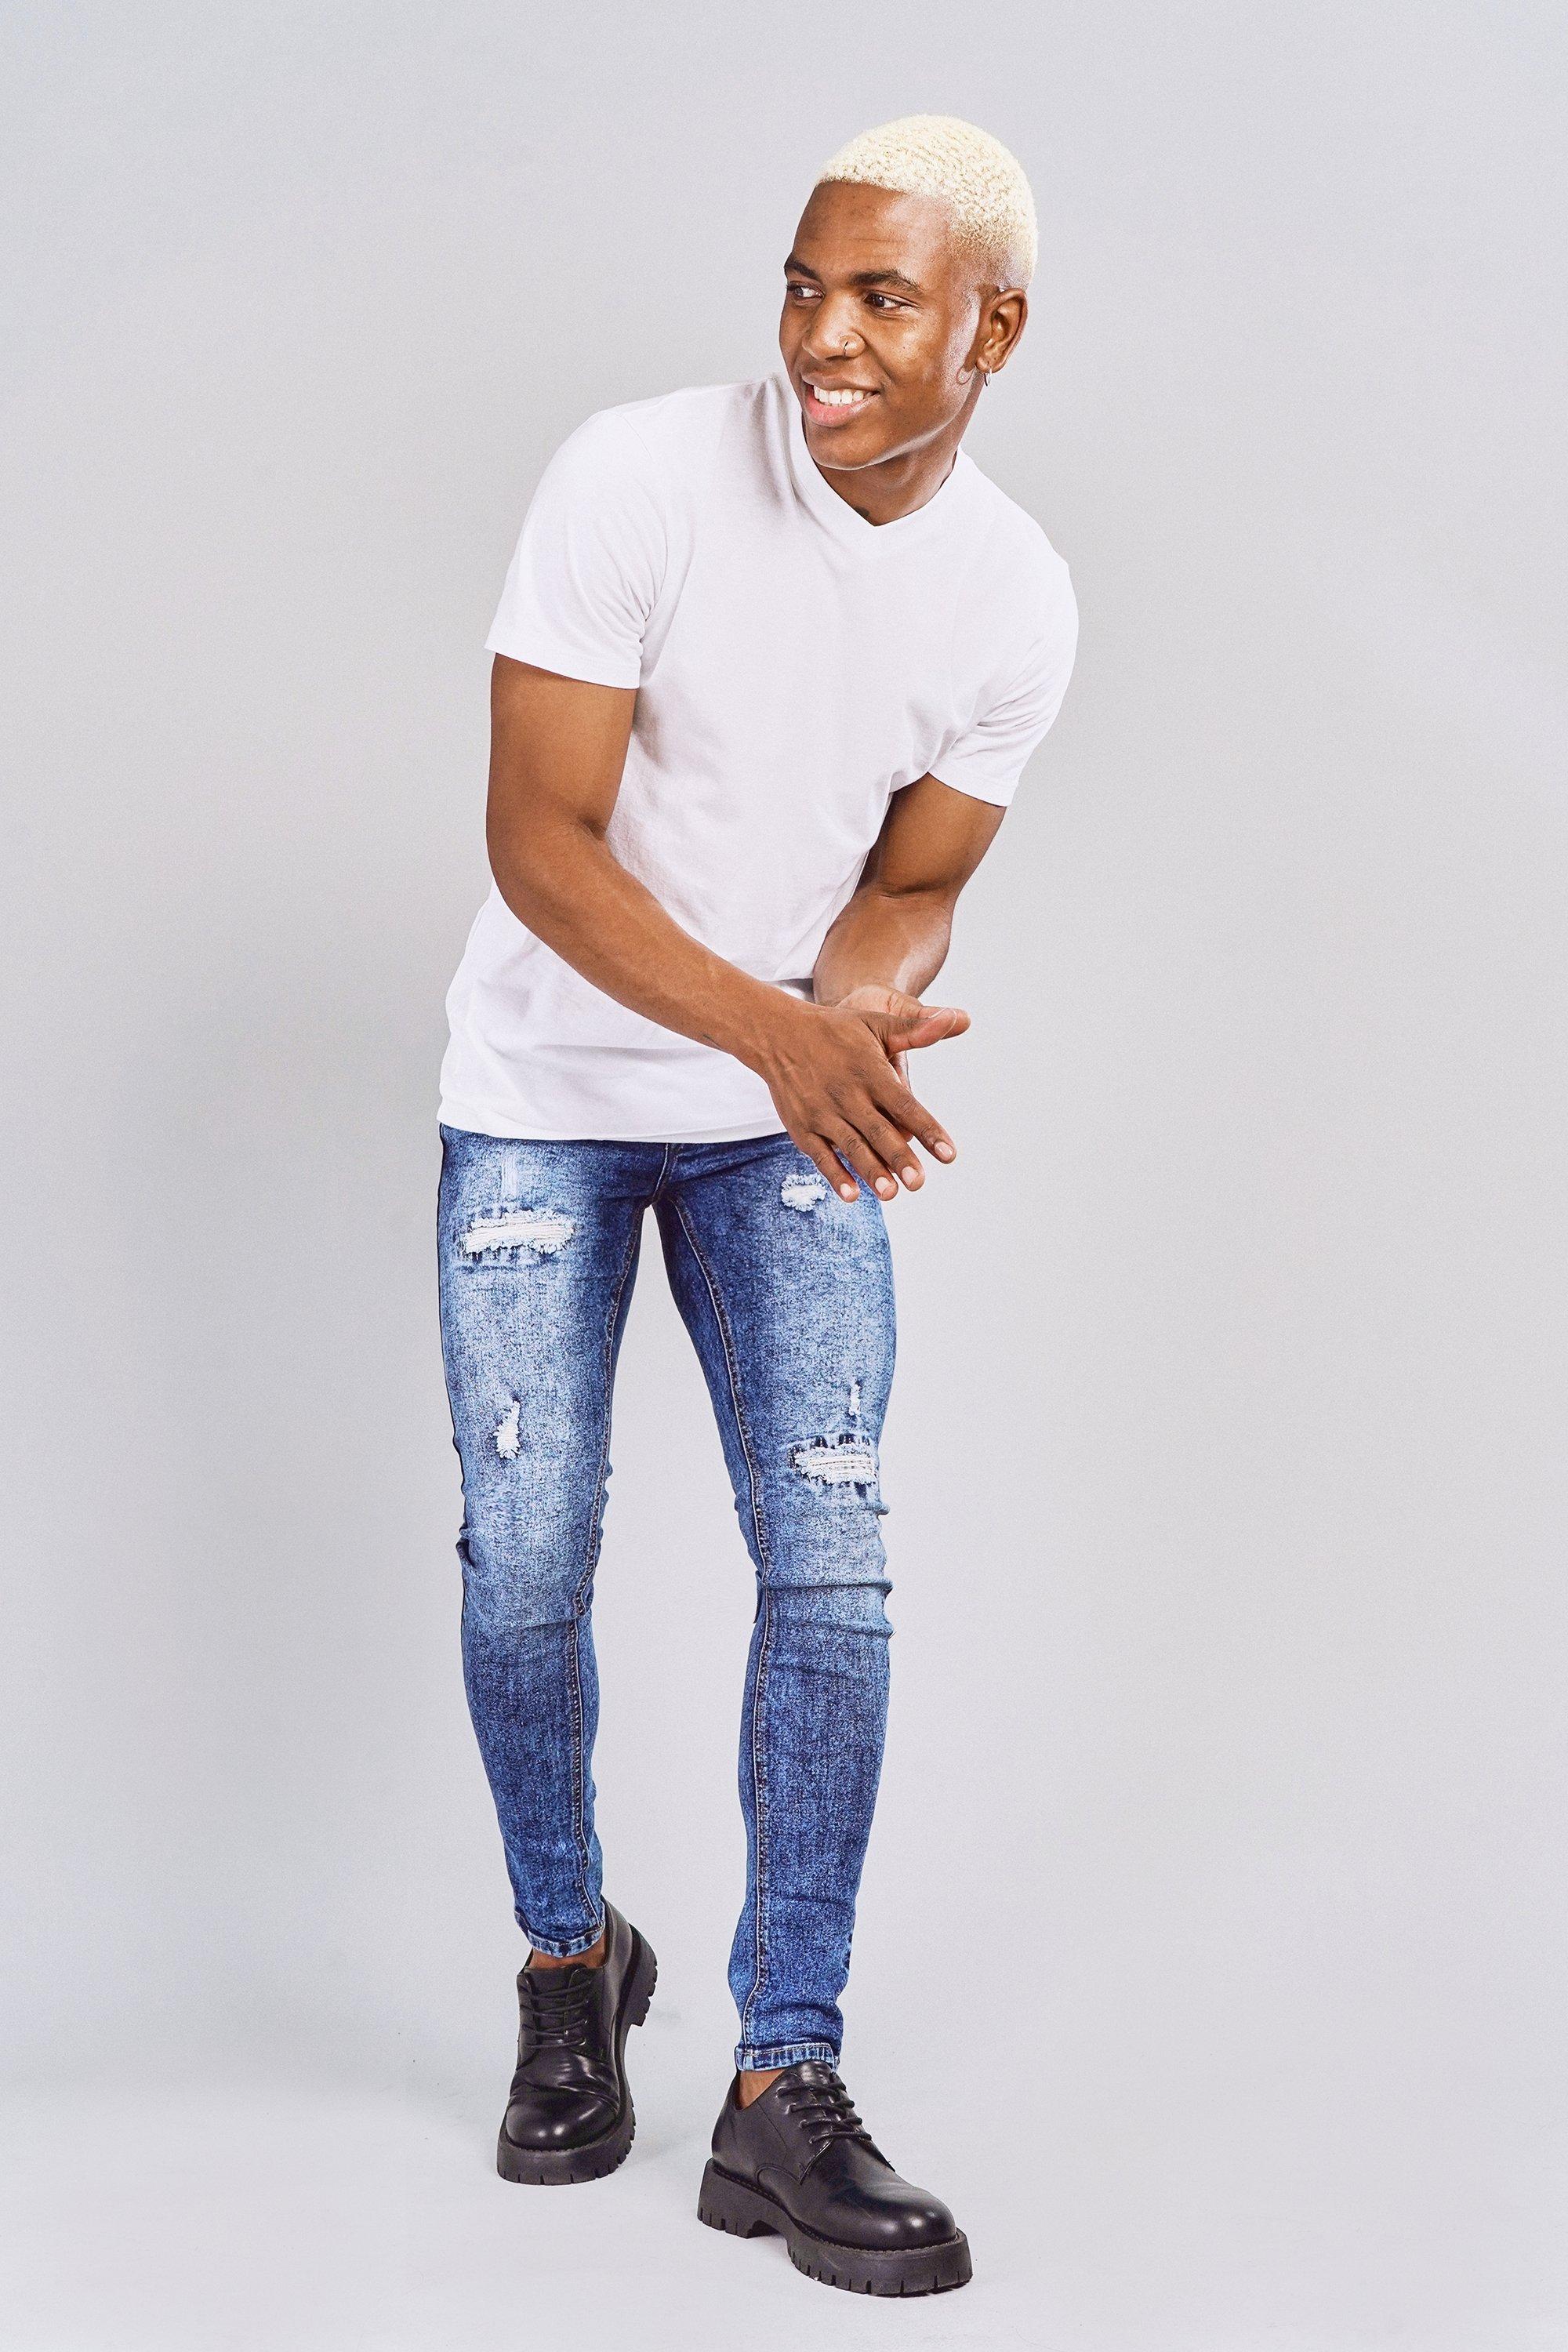 Mr Price | Men's Denim jeans Fit, skinny spray on jeans | South Africa